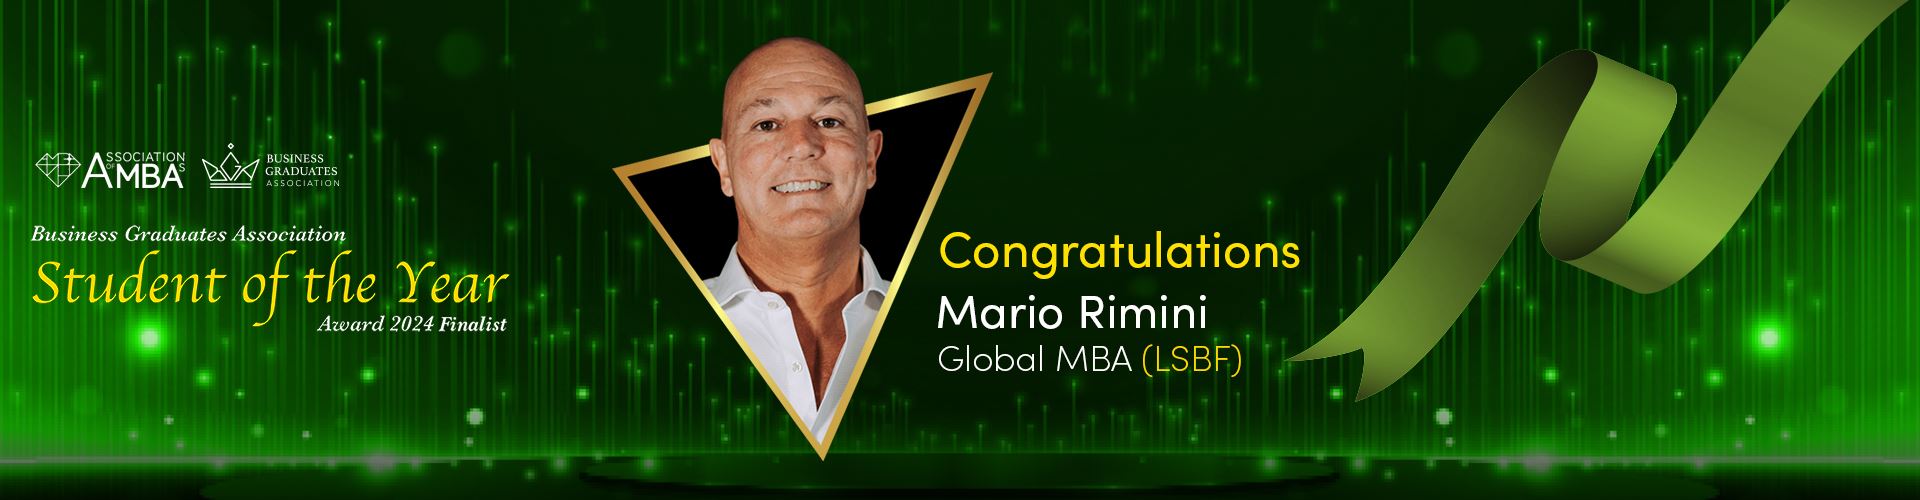 Mario Rimini: A Rising Star Shortlisted for BGA Student of the Year Award 2024